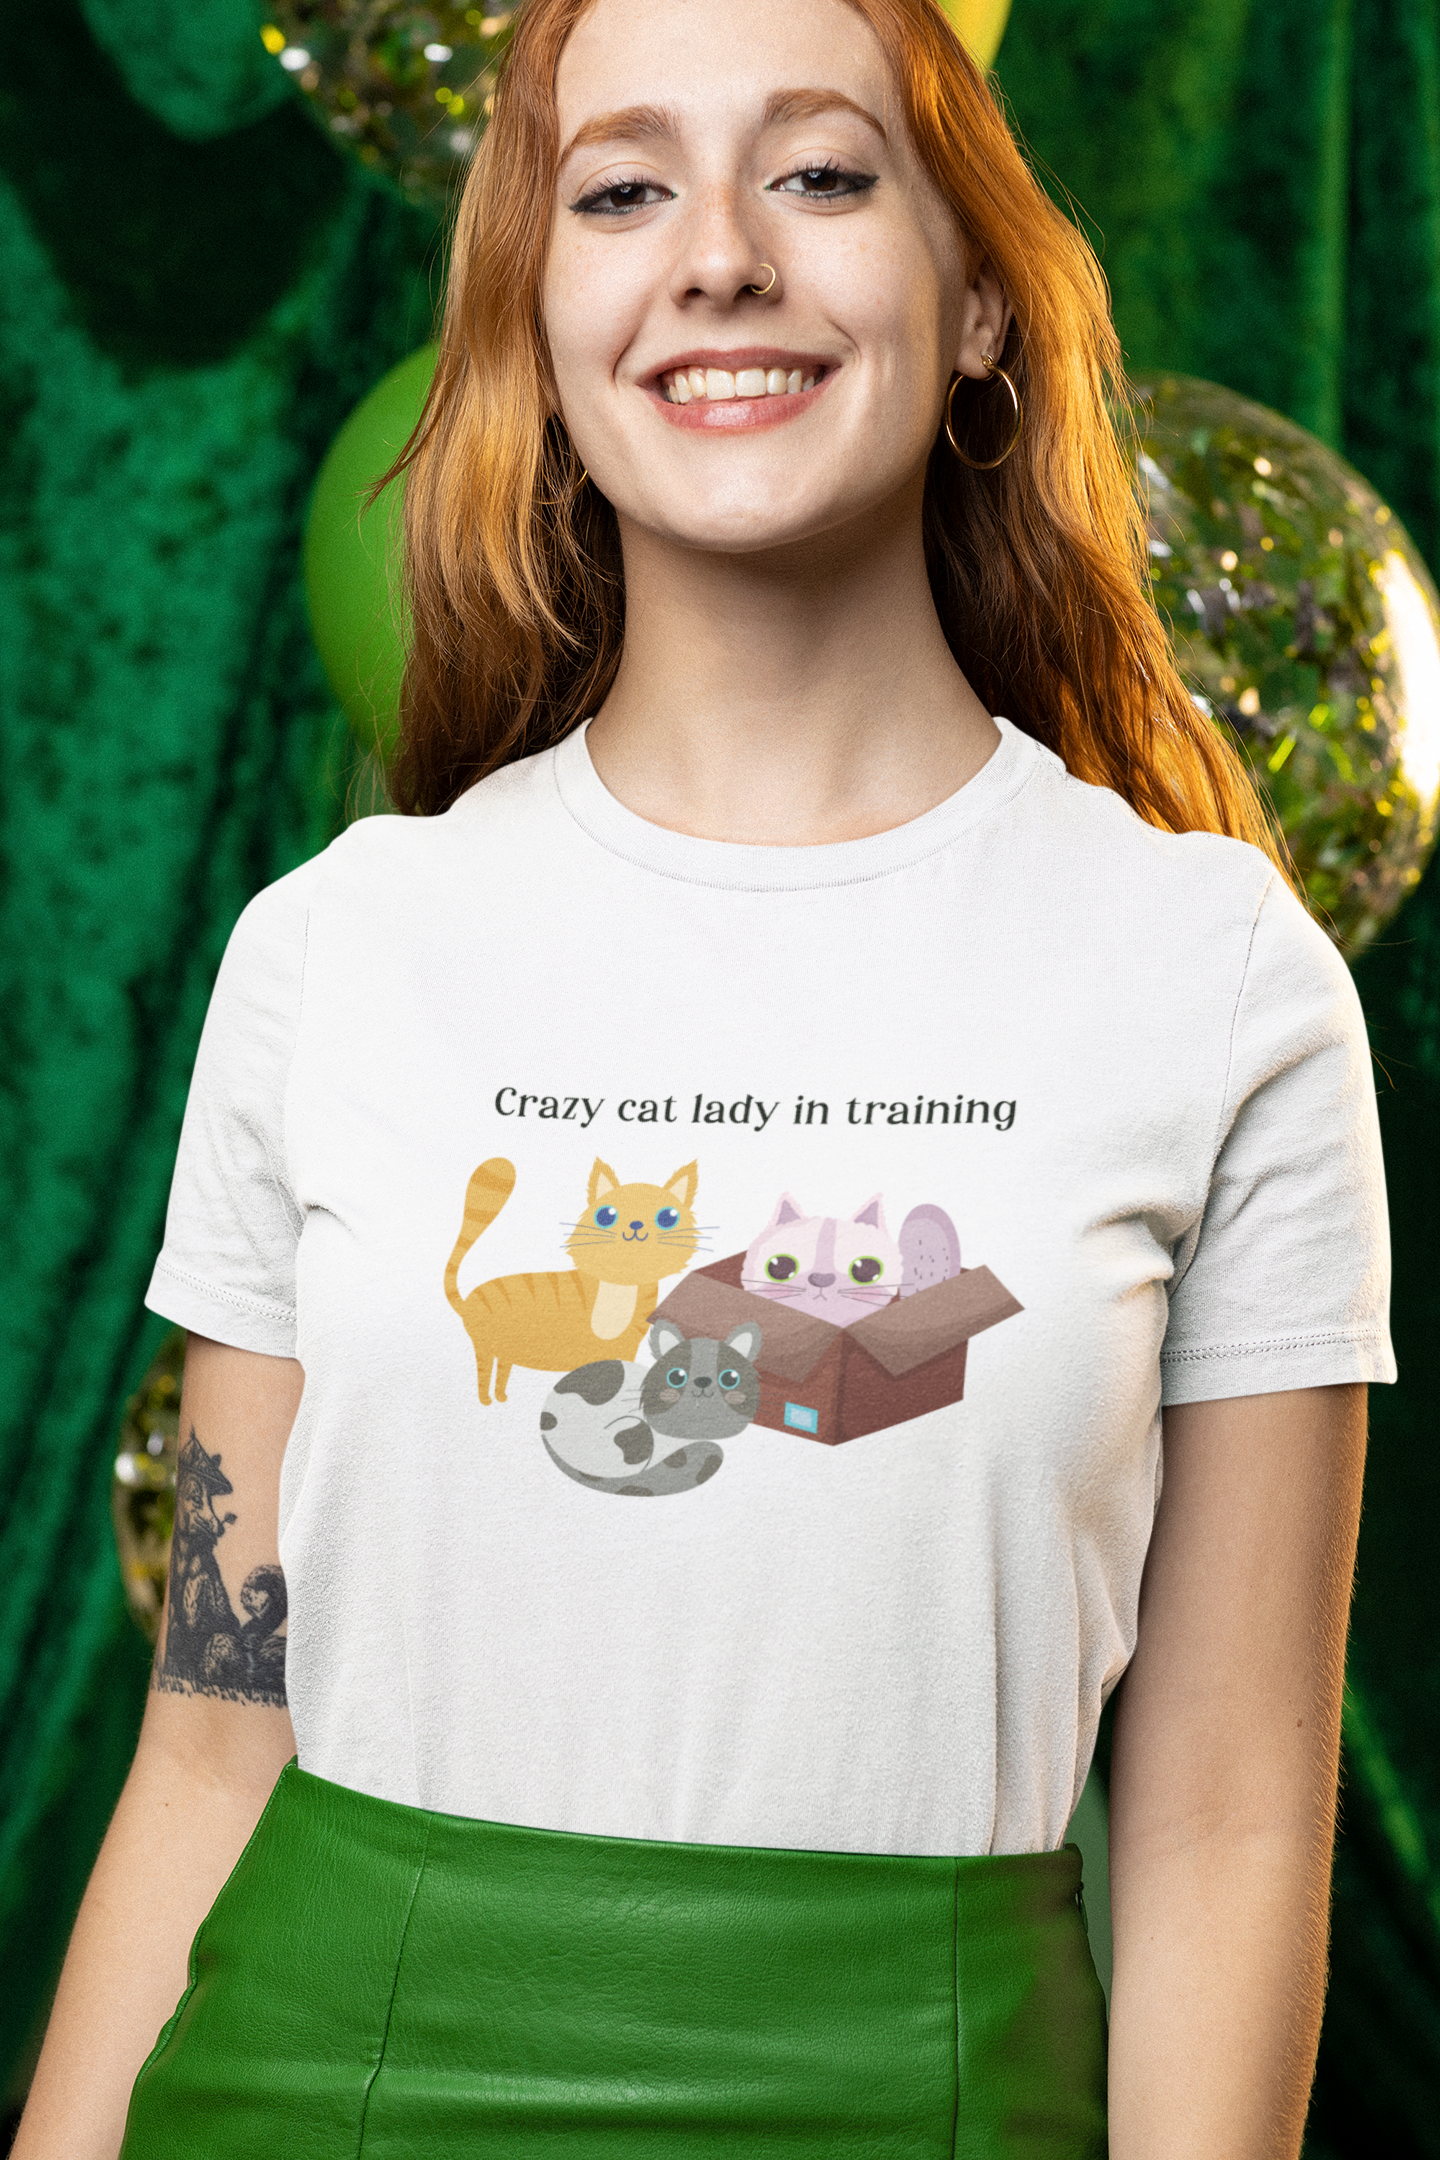 Cat lady in training T-Shirt